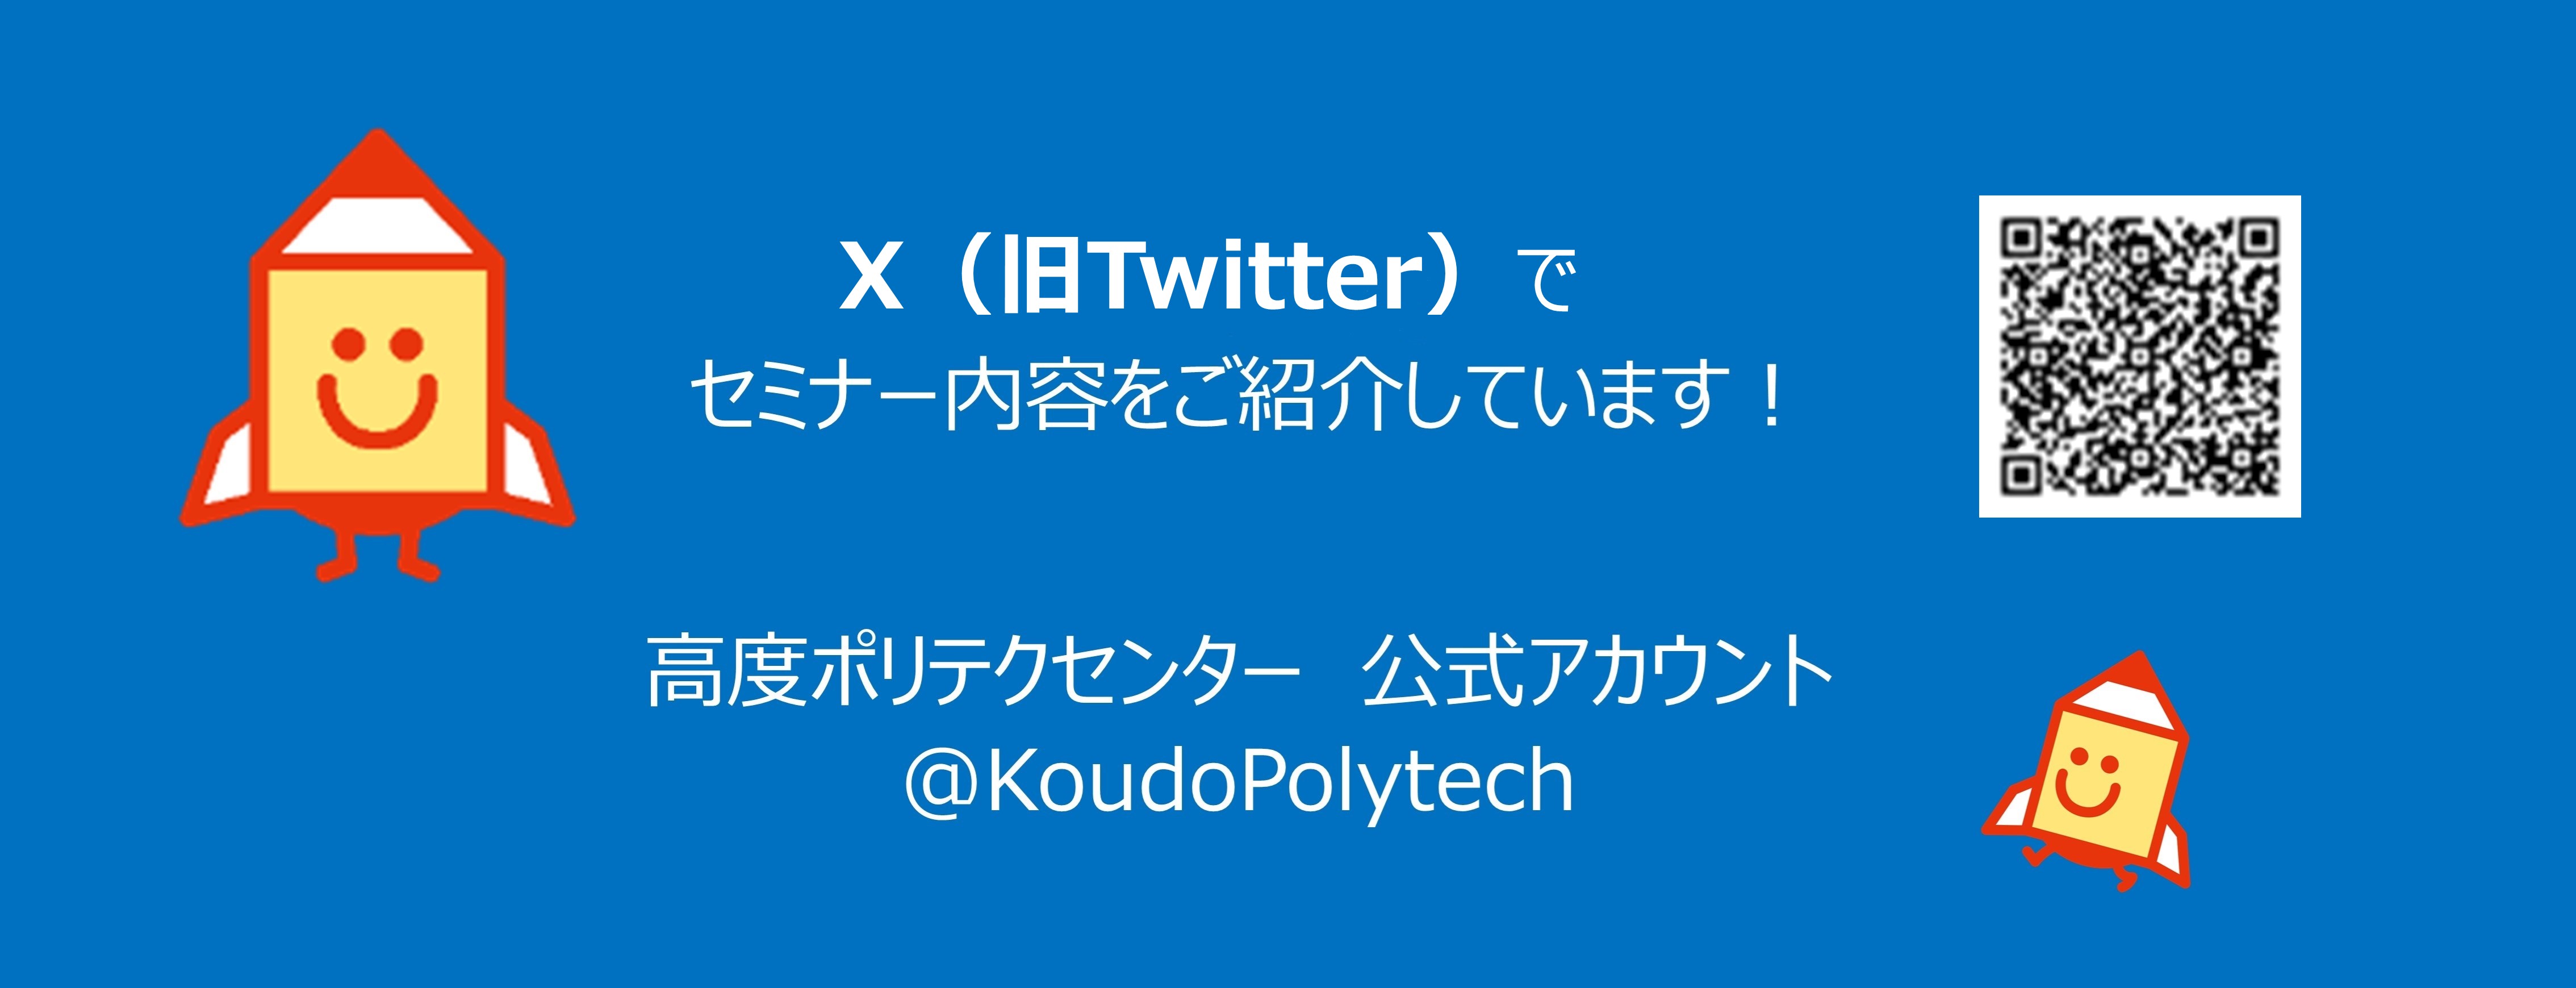 Twitterでセミナー内容をご紹介しています。高度ポリテクセンター公式アカウント@KoudoPolytech